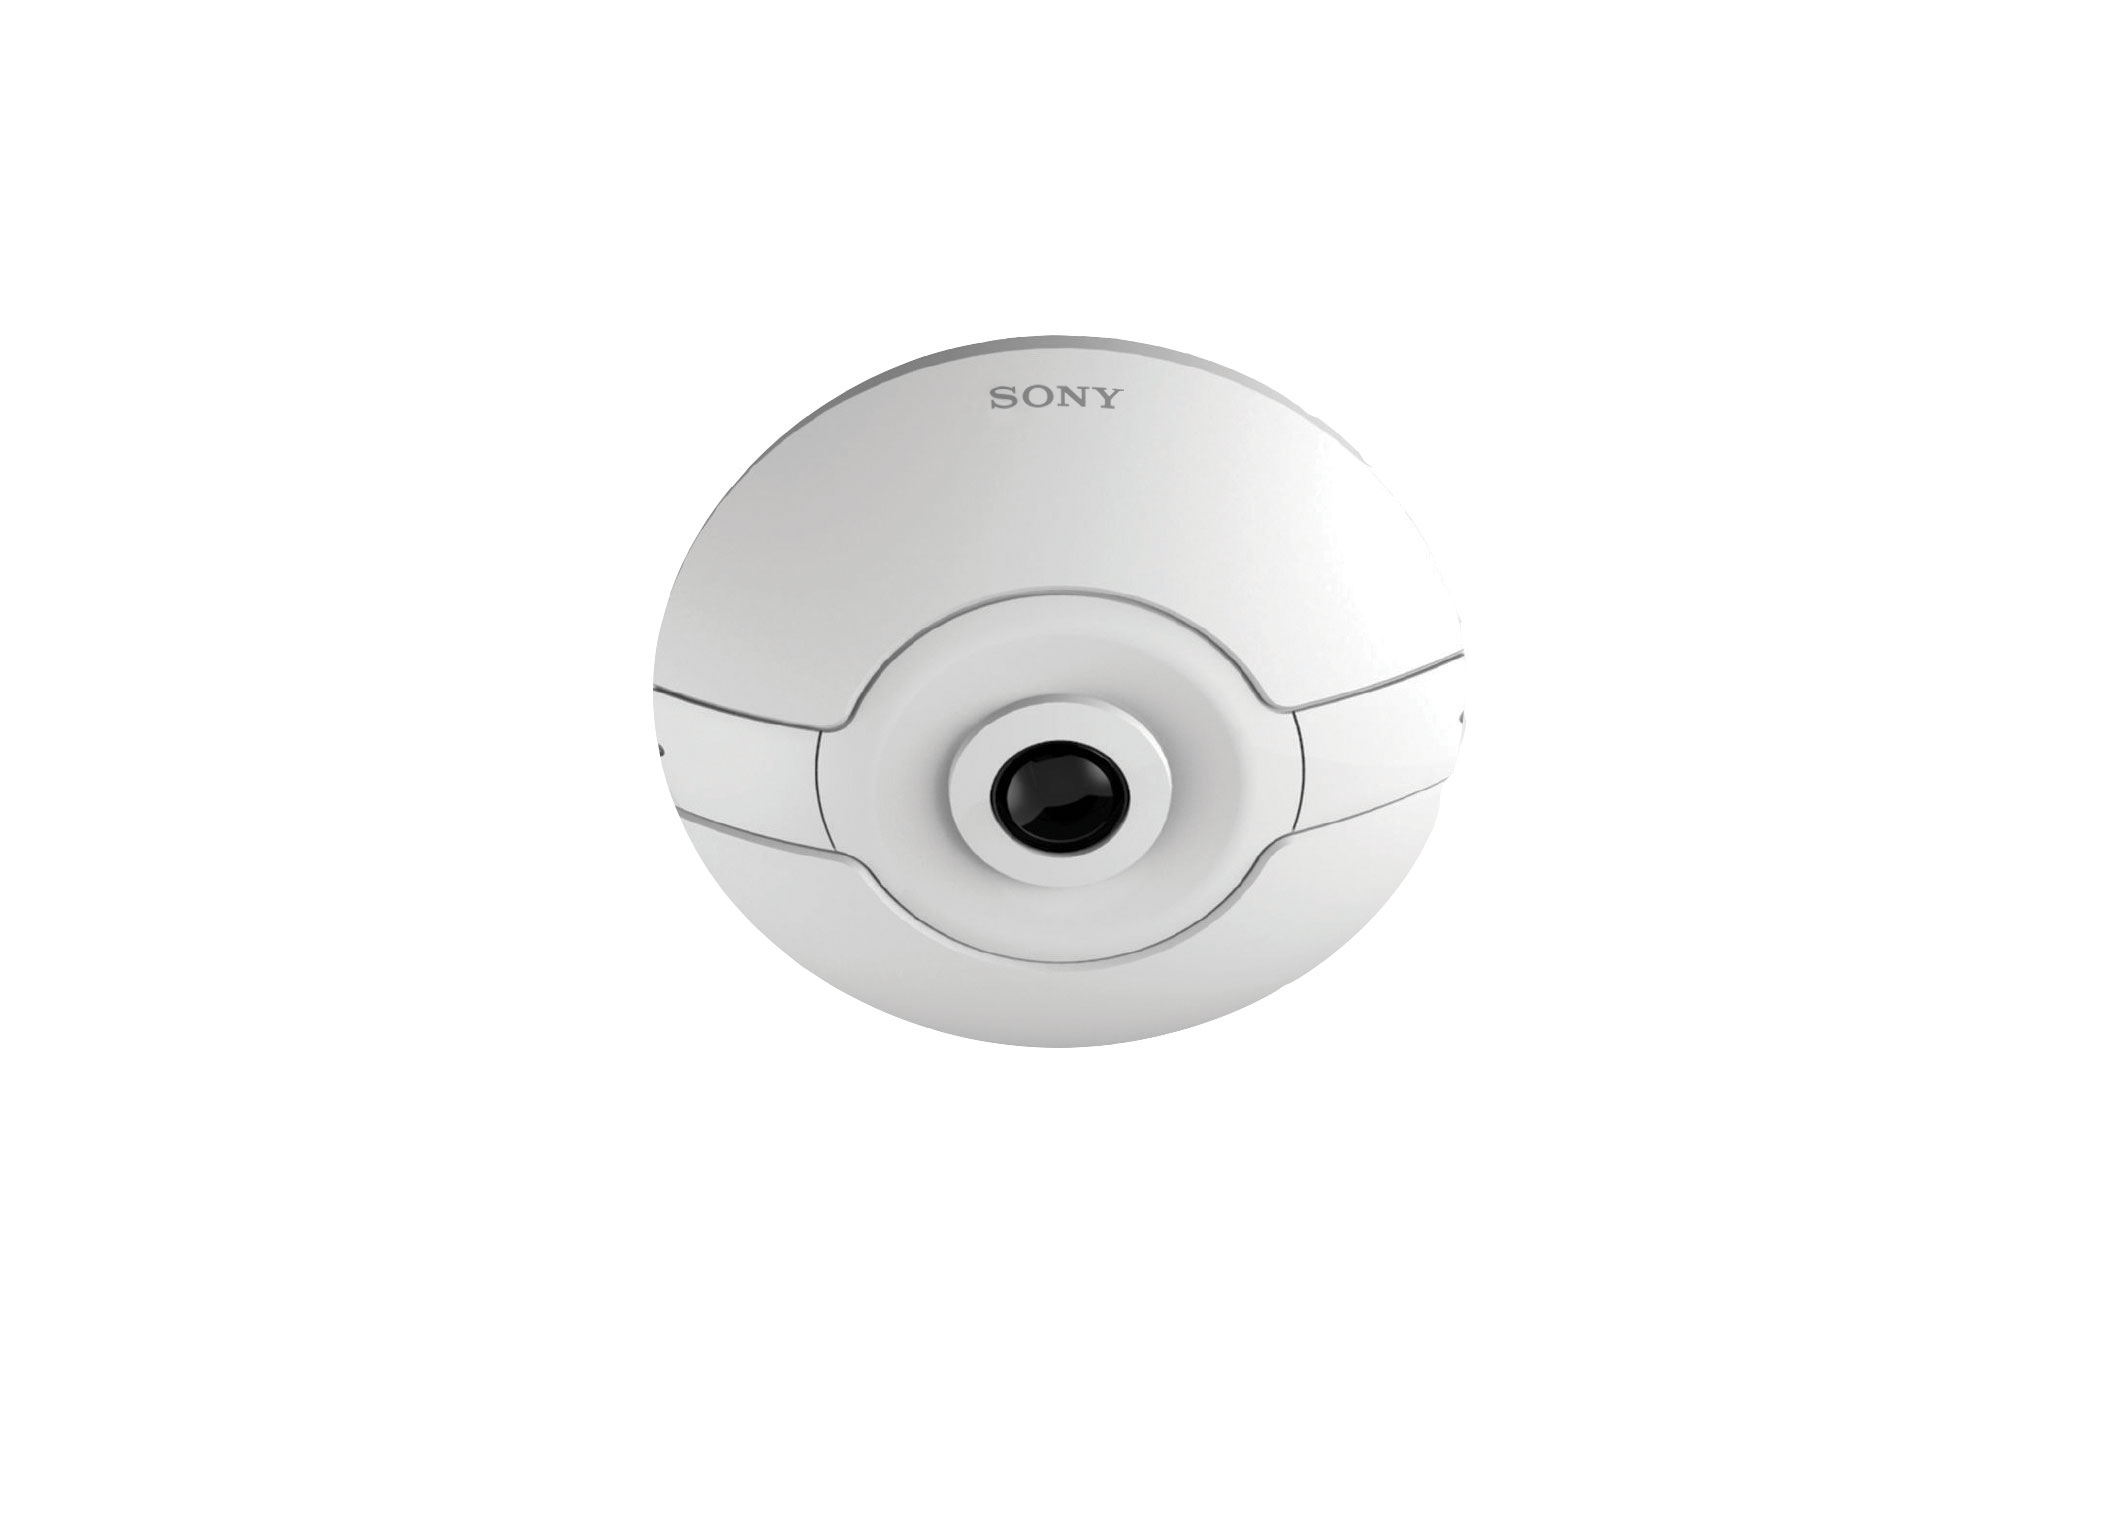 Sony's SNC-HMX70 IP Network Security Camera